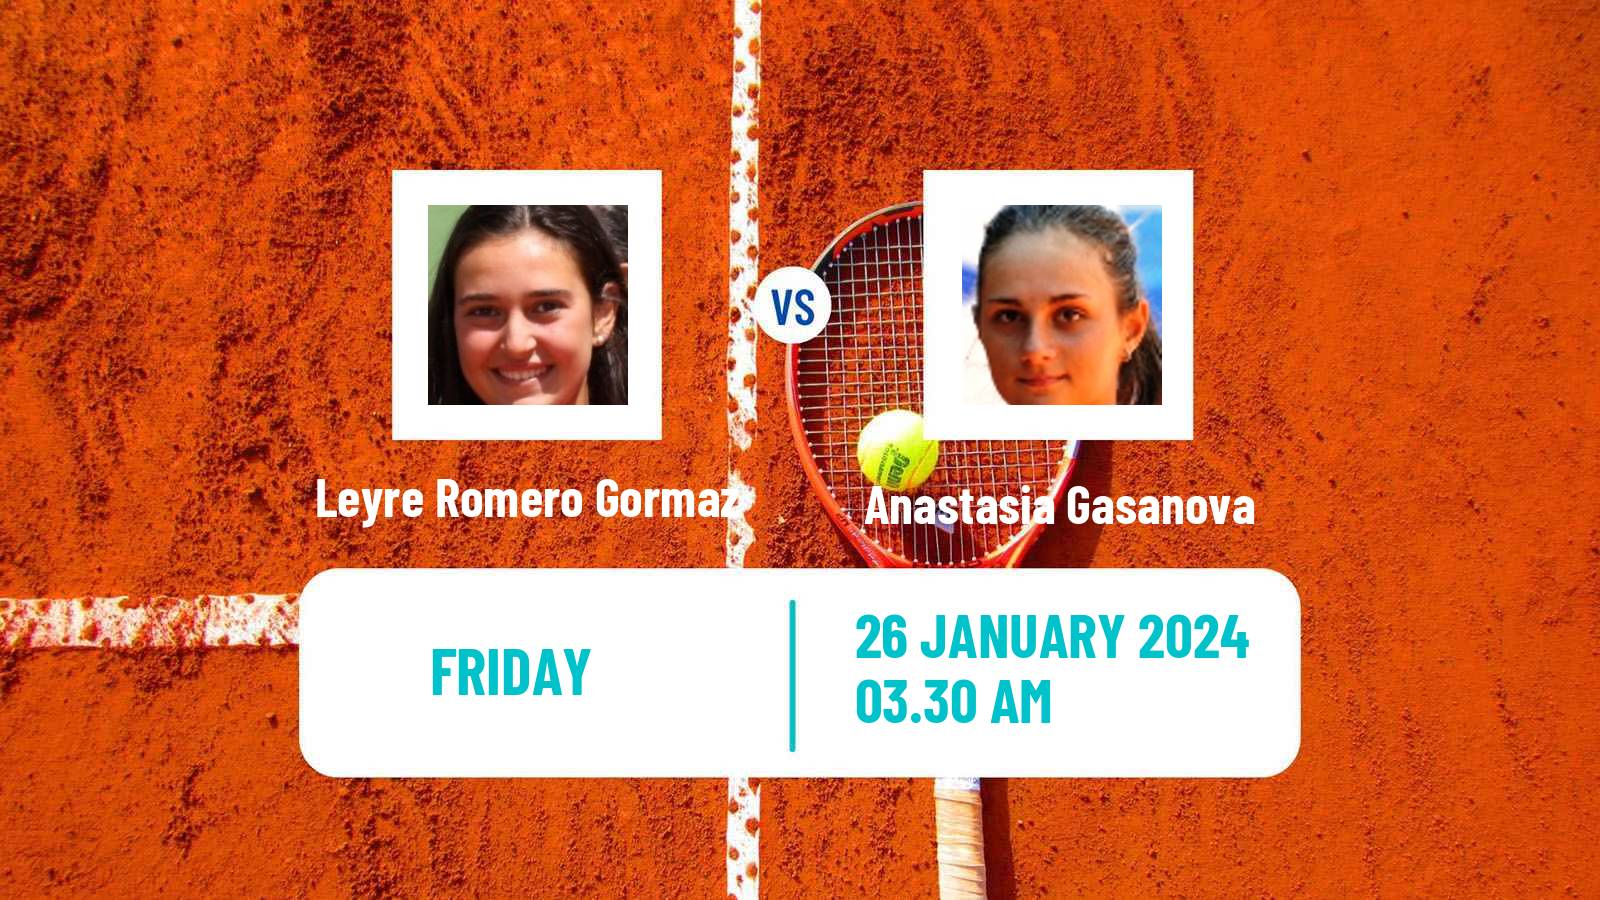 Tennis ITF W35 Monastir 2 Women Leyre Romero Gormaz - Anastasia Gasanova